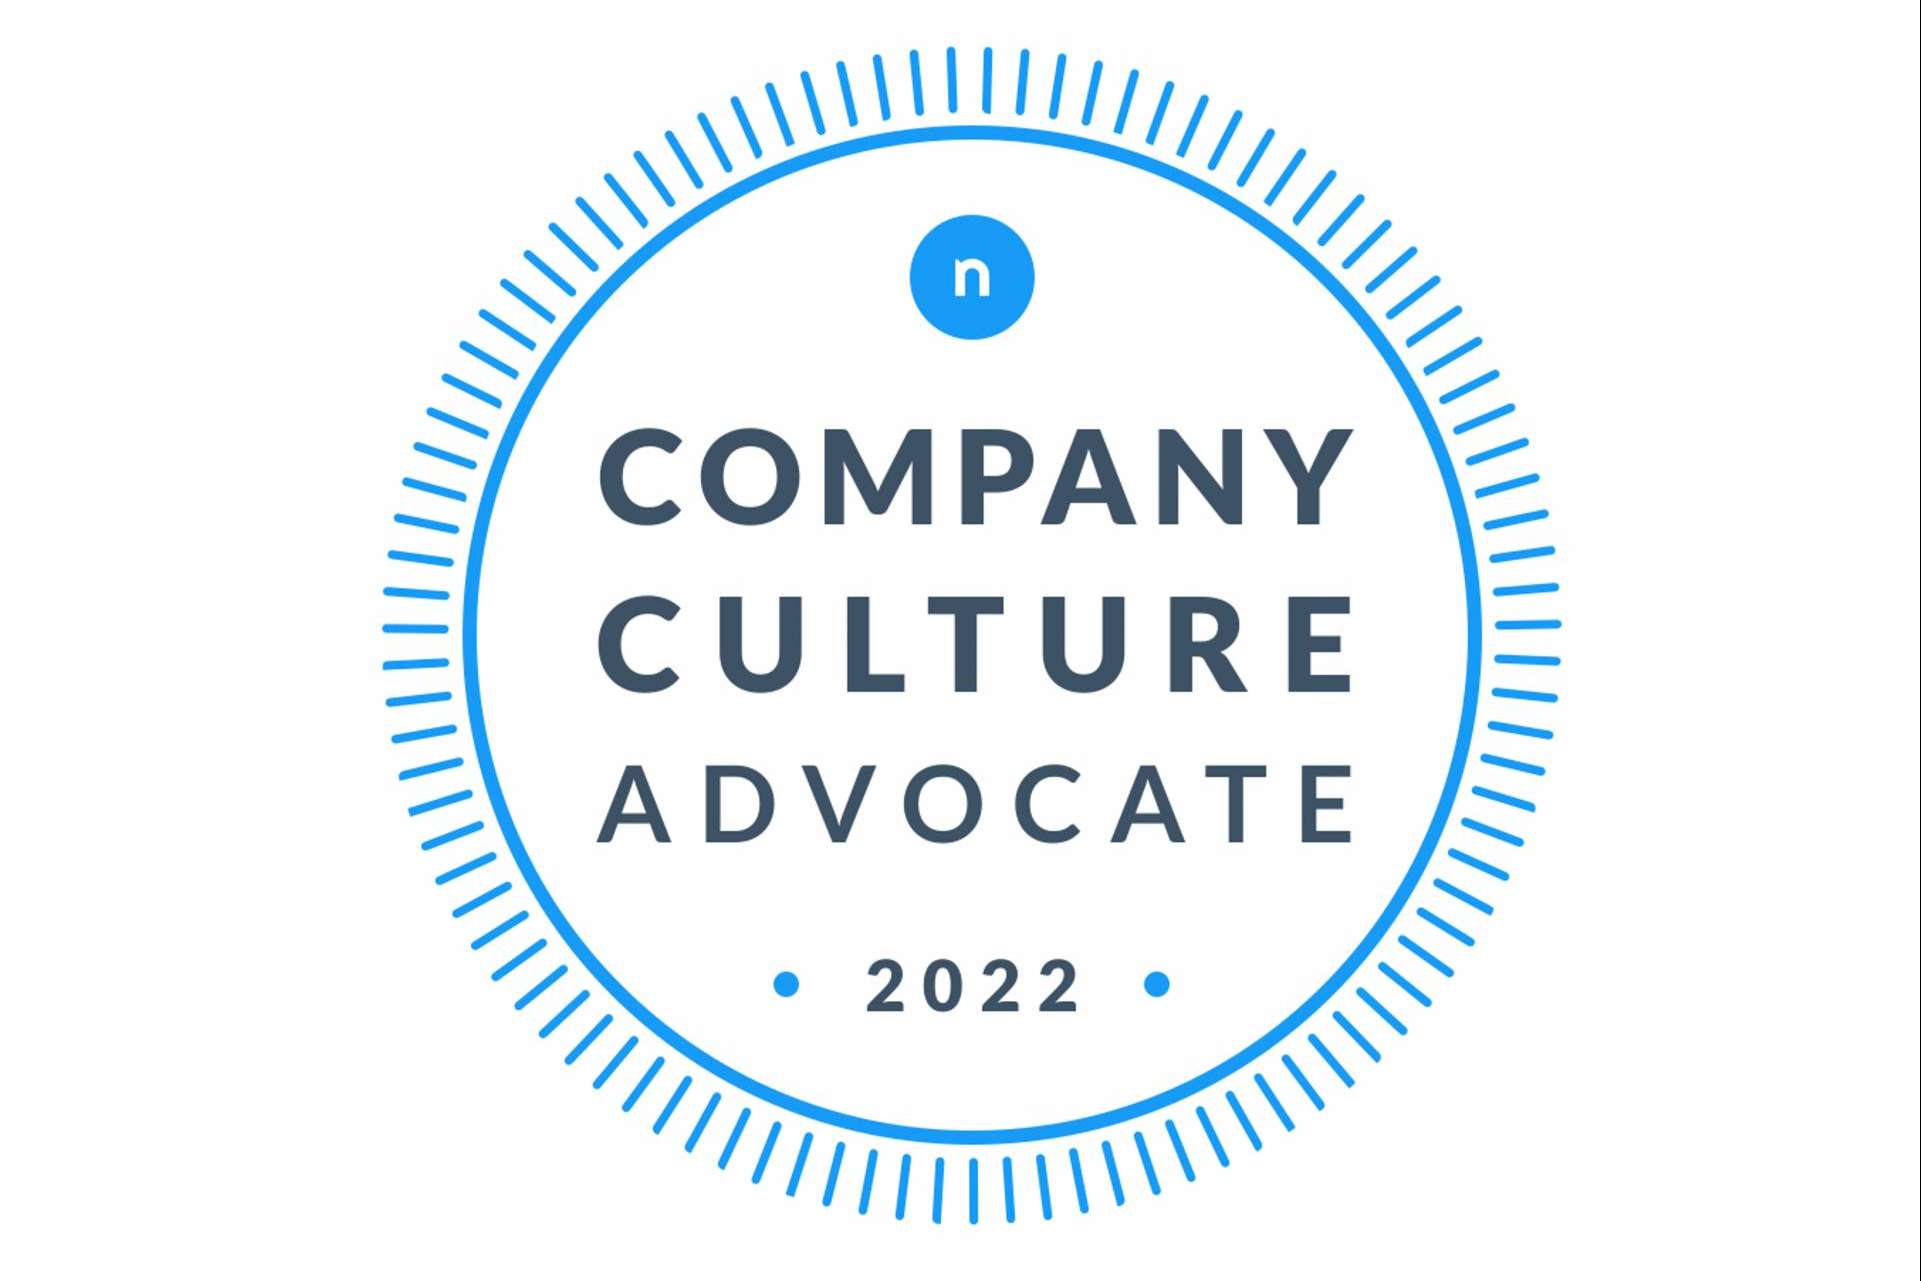 Nailted reconoce la buena cultura empresarial a través de su Company Culture Advocate badge